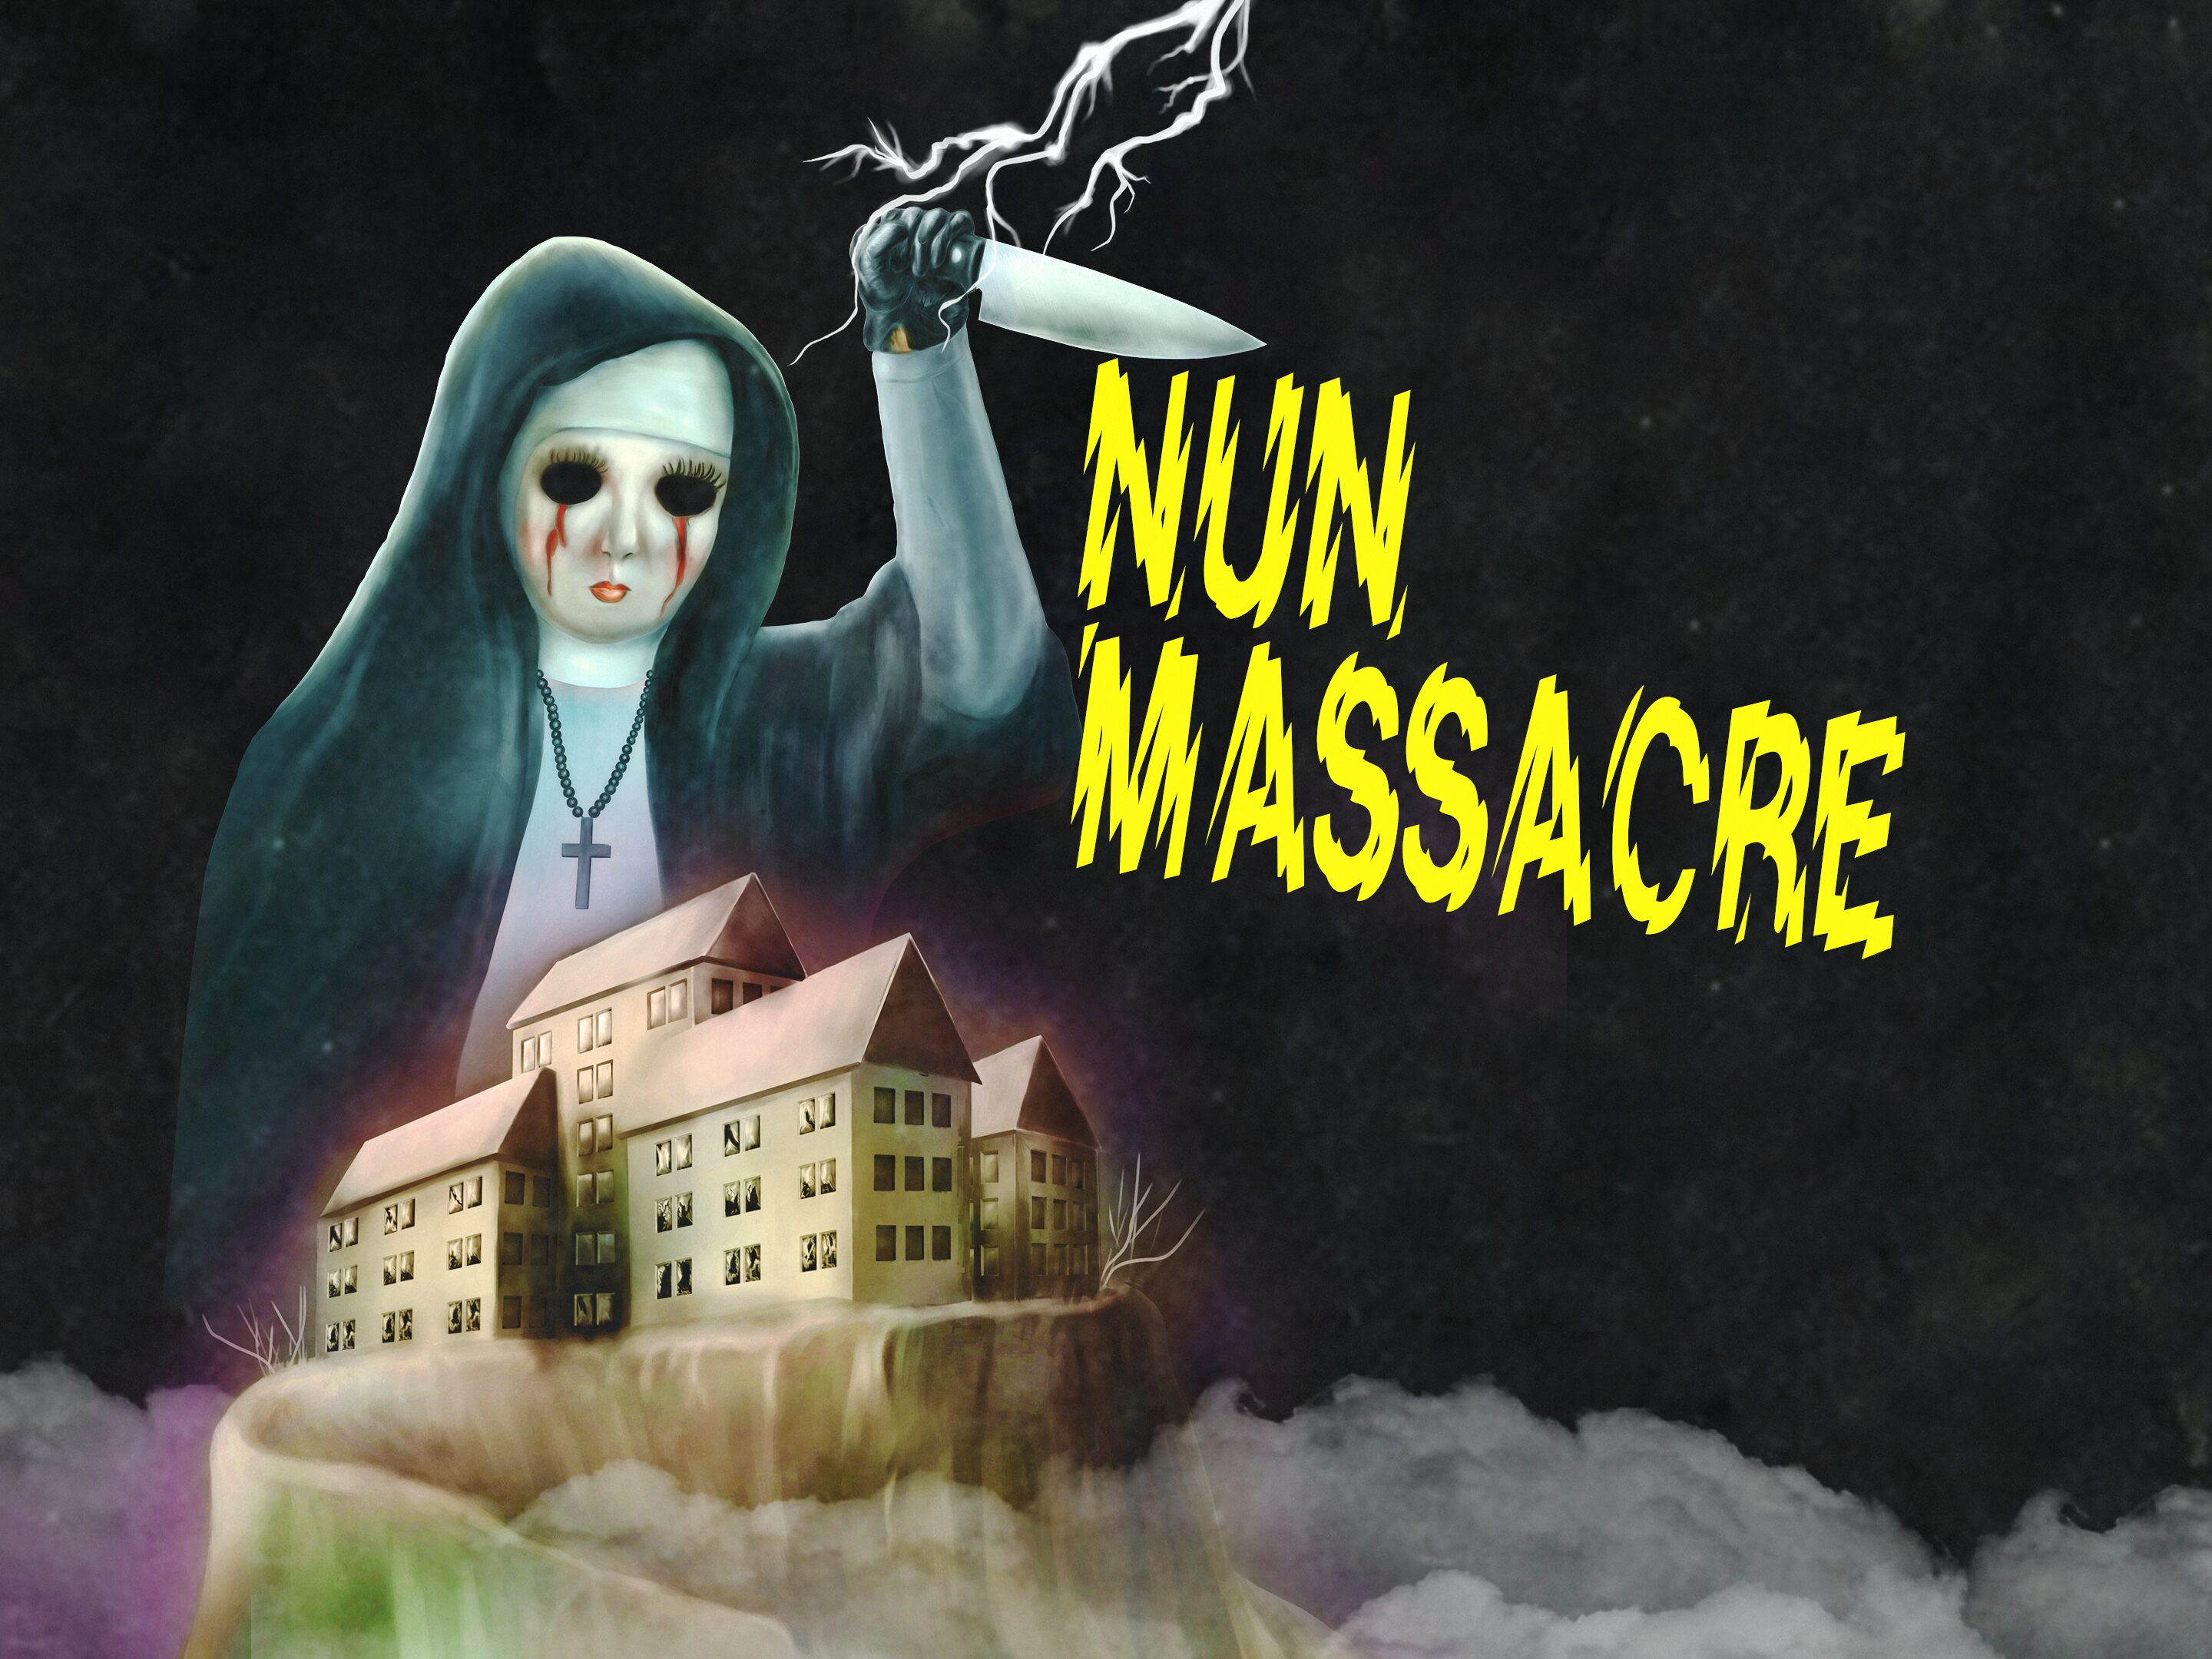 Nun massacre